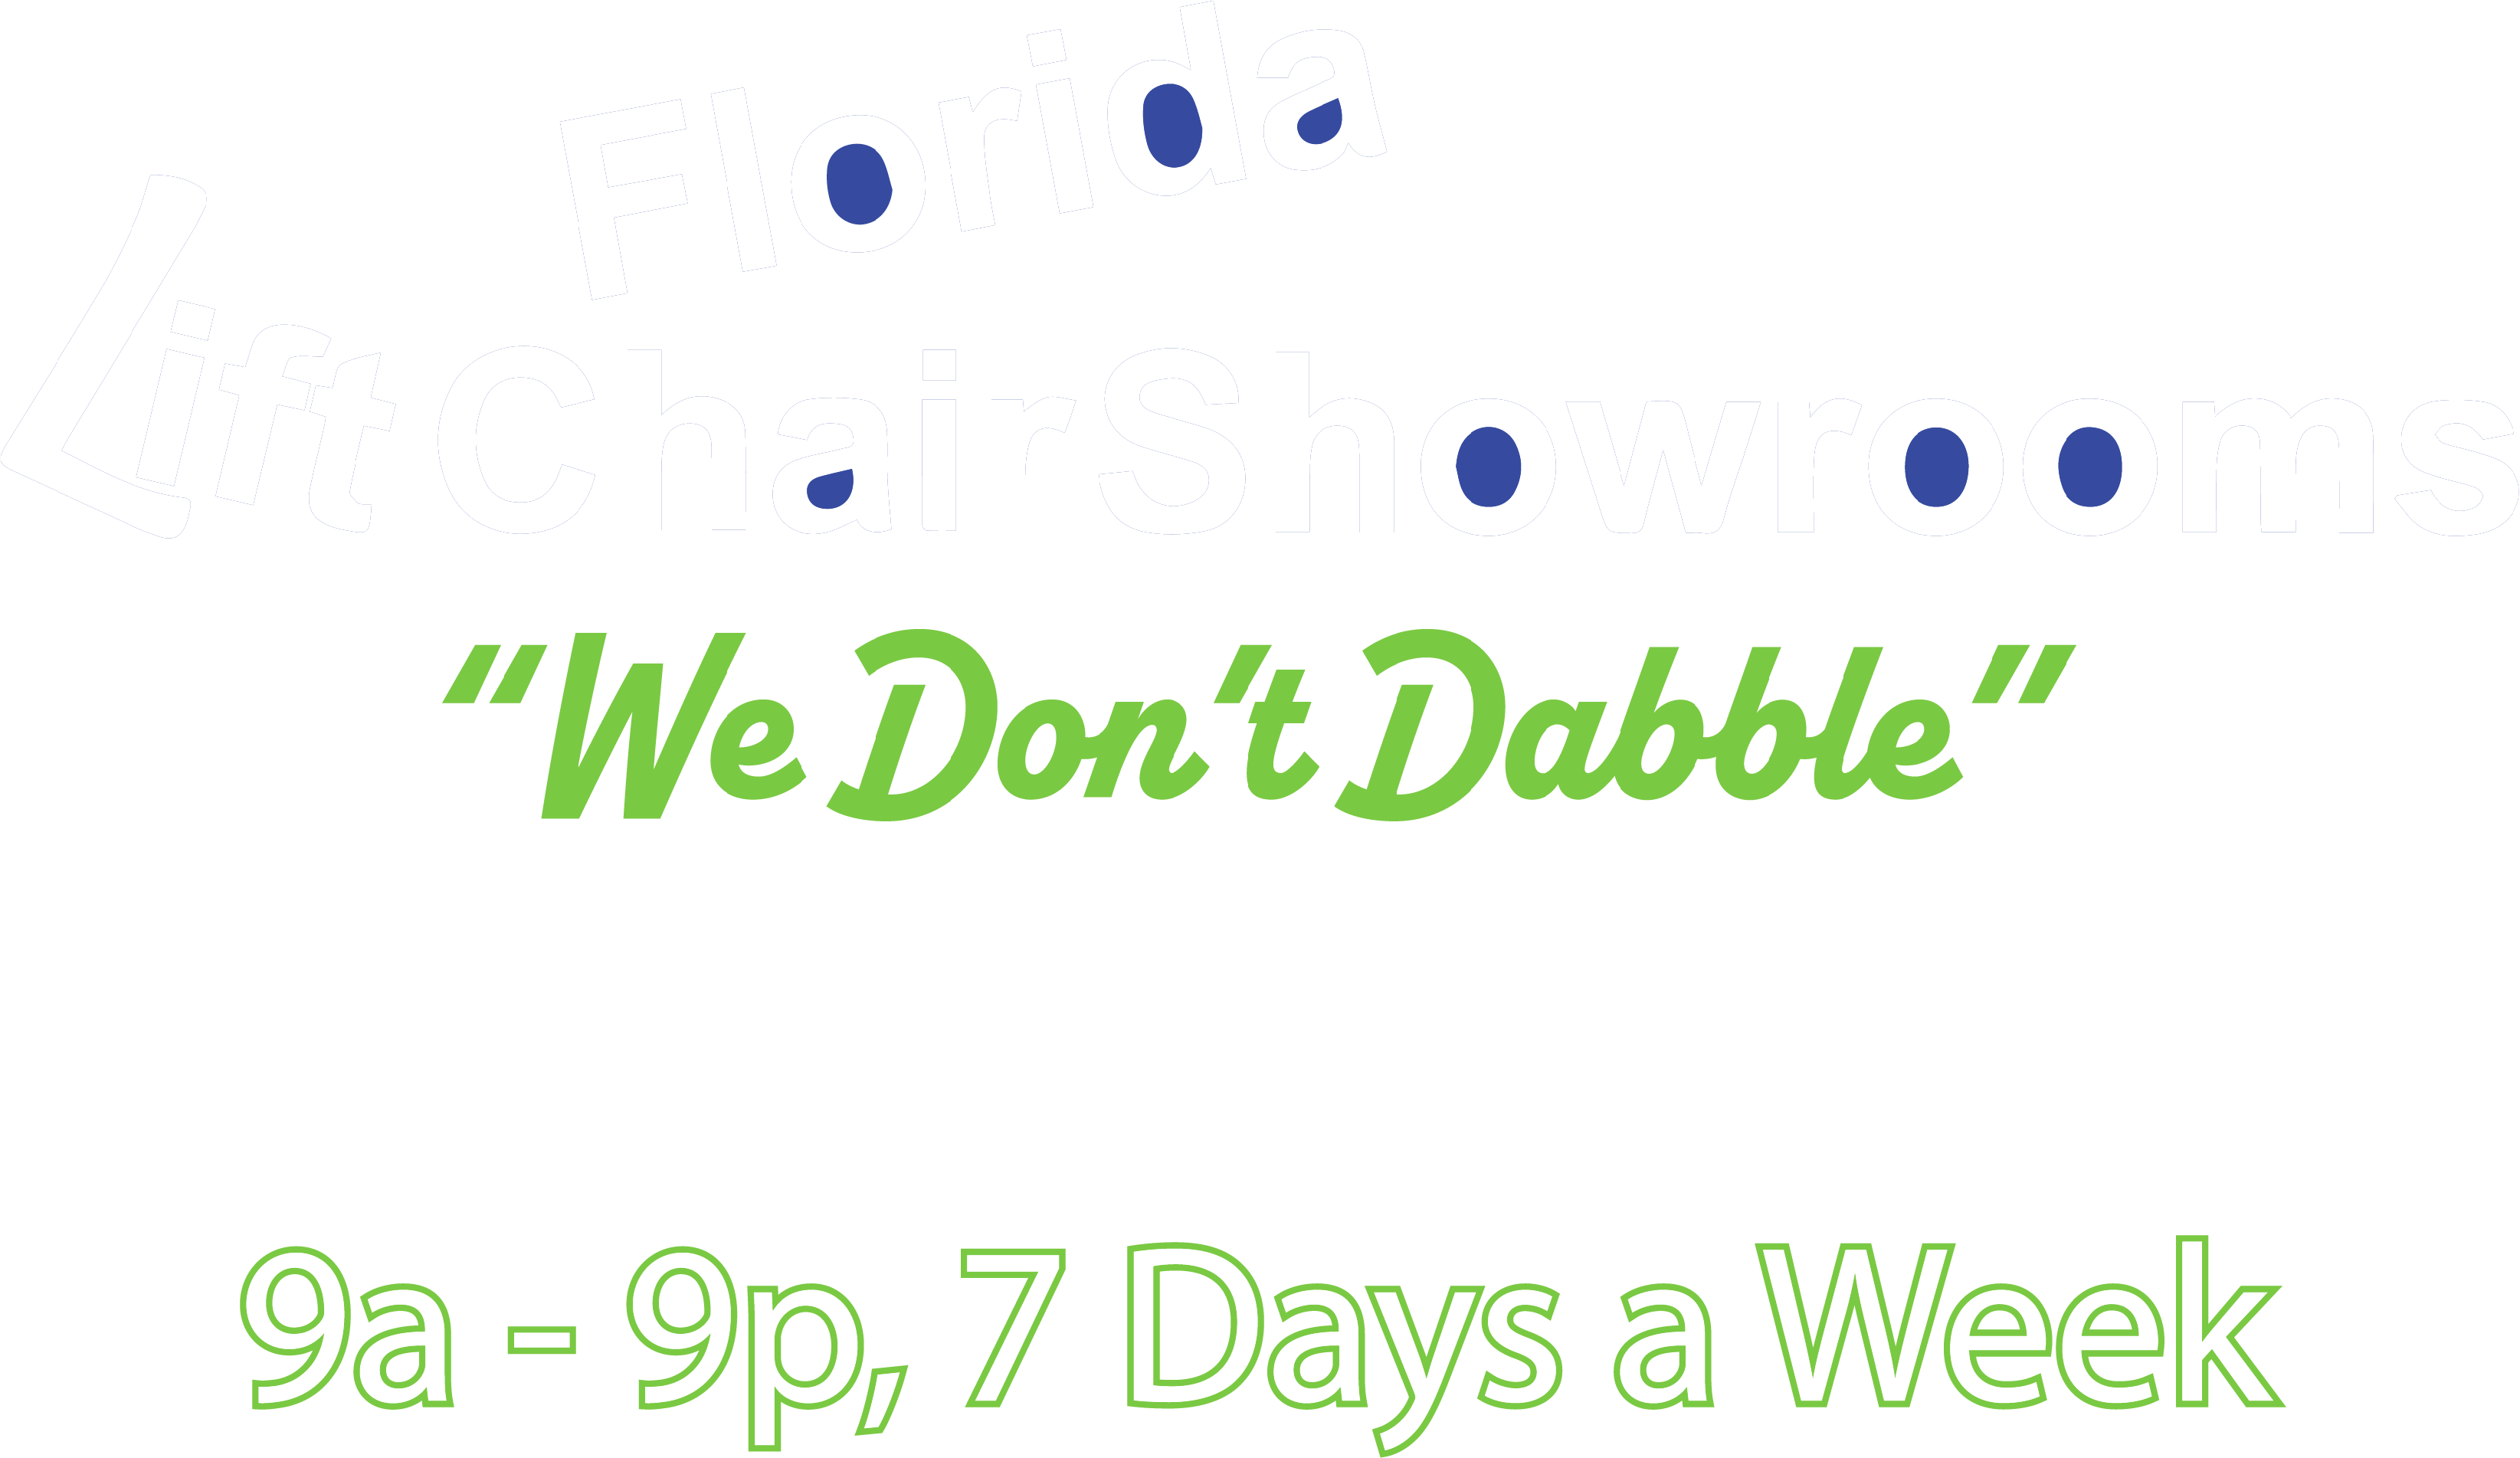 Florida Lift Chair Showroom logo